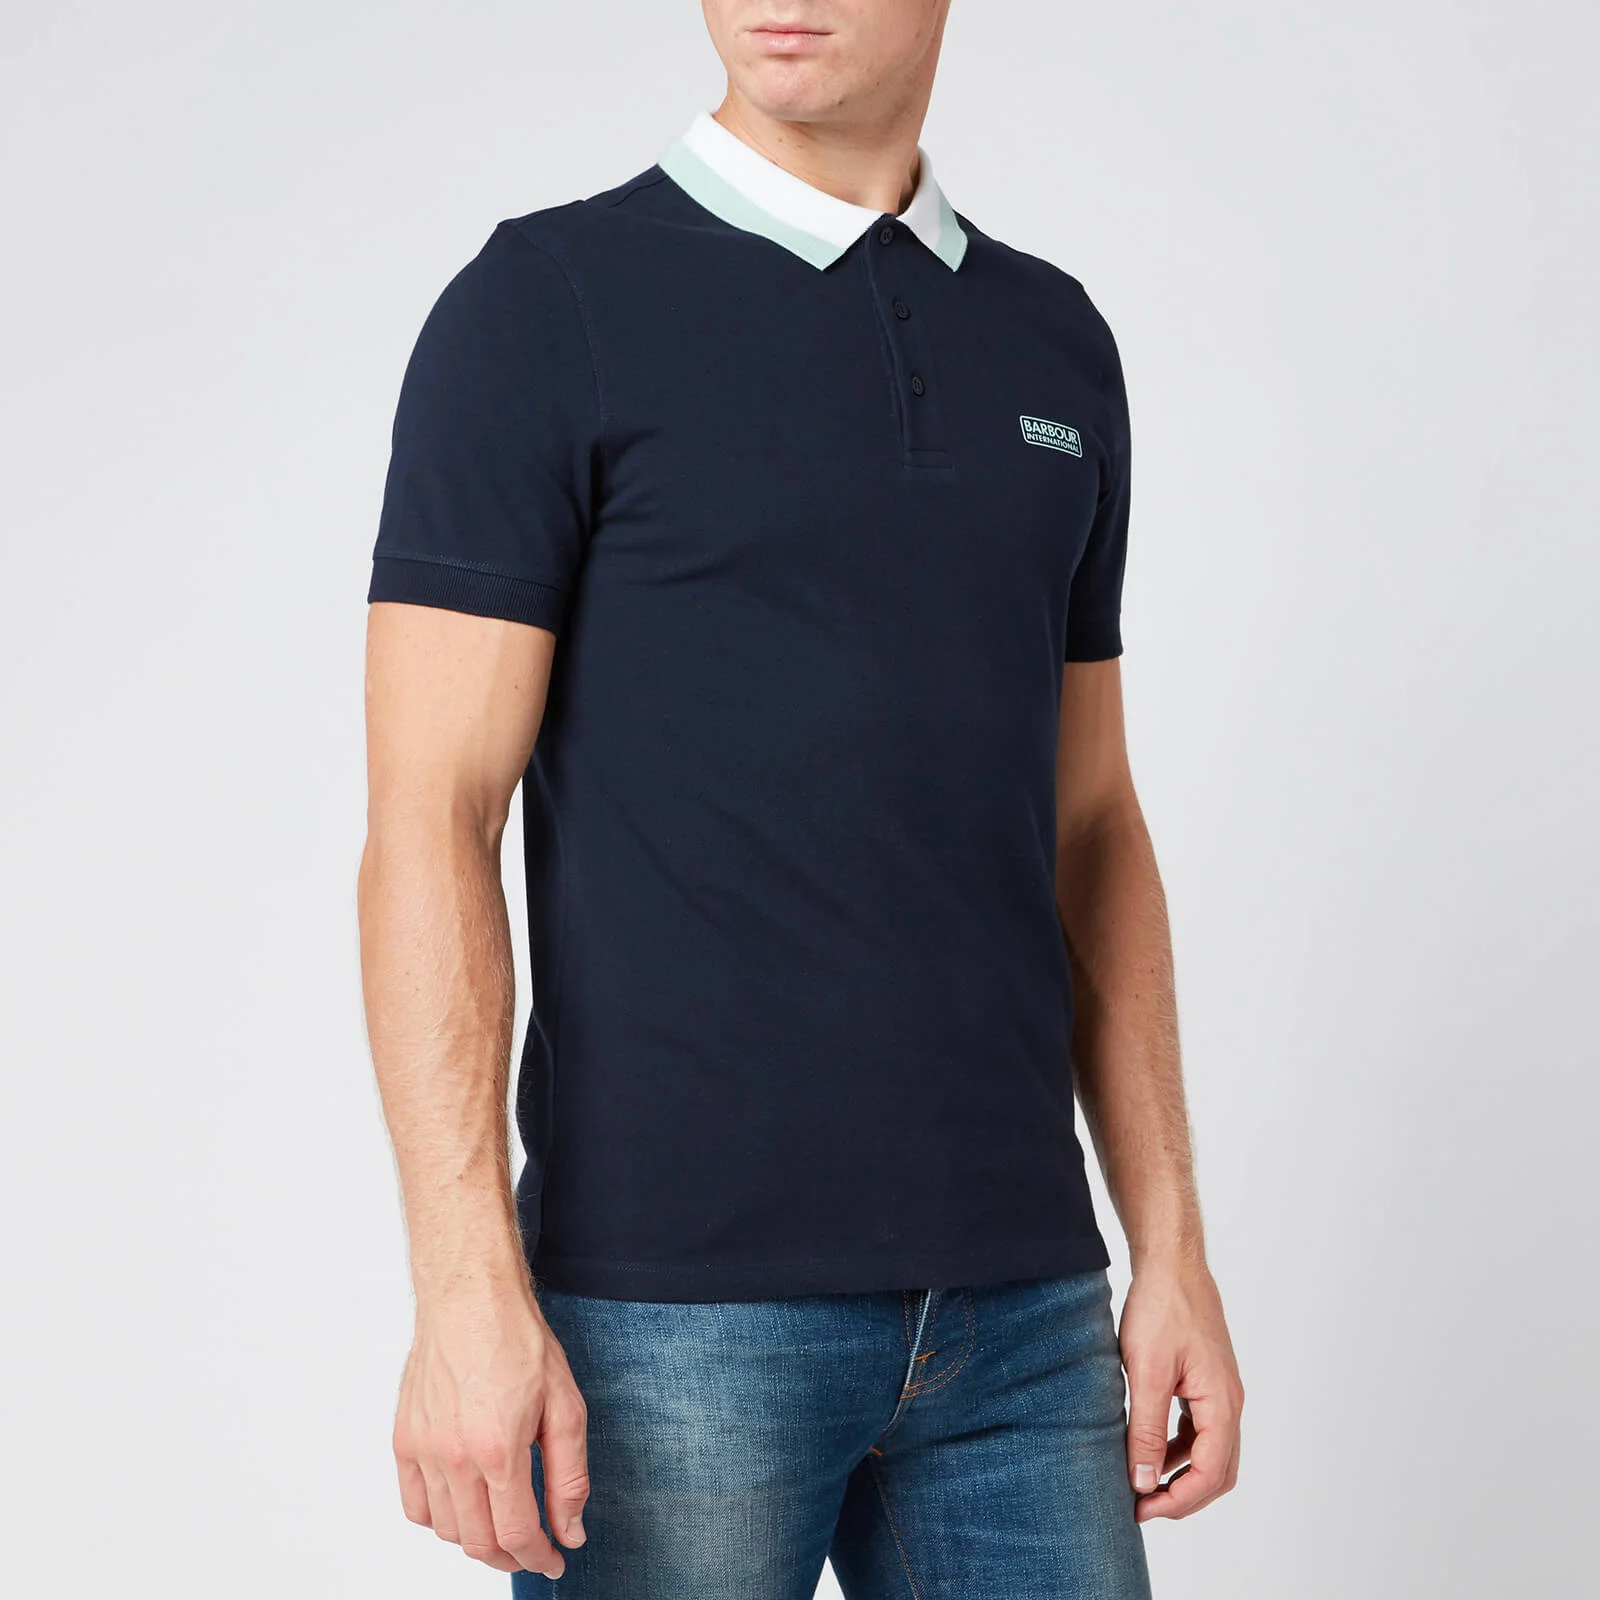 Barbour International Men's Ampere Polo Shirt - International Navy Image 1